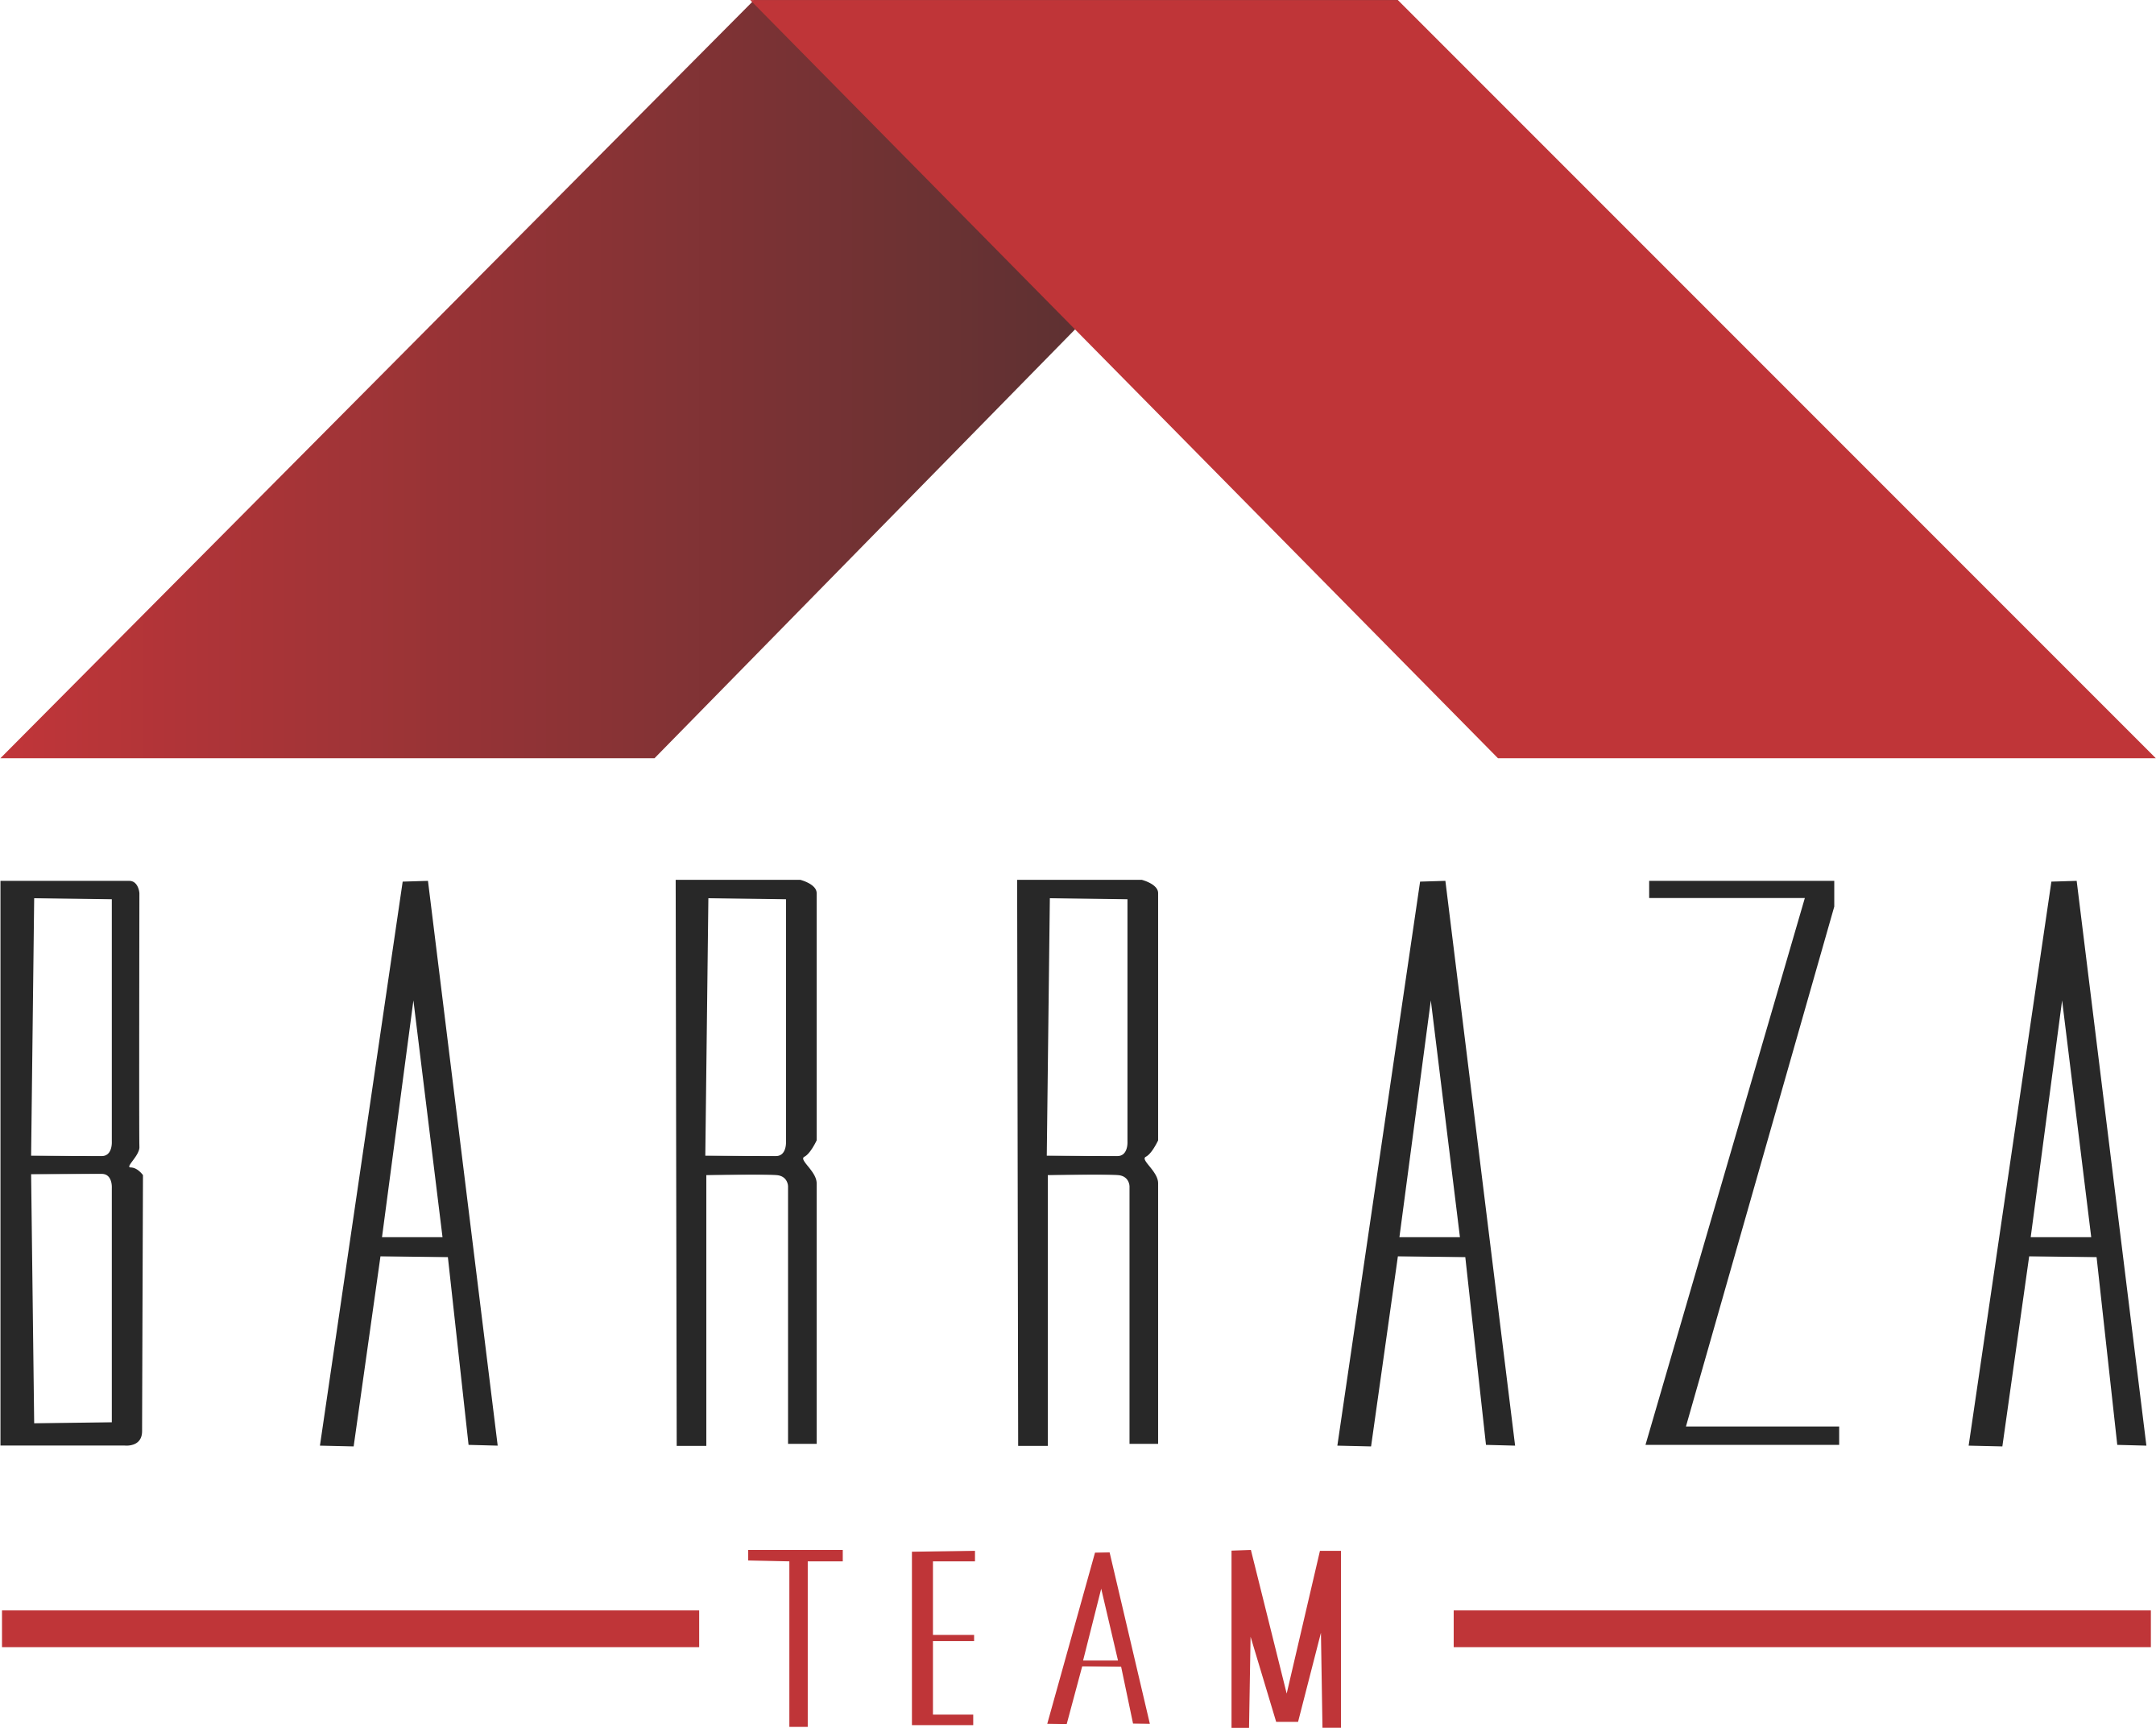 Barraza Team